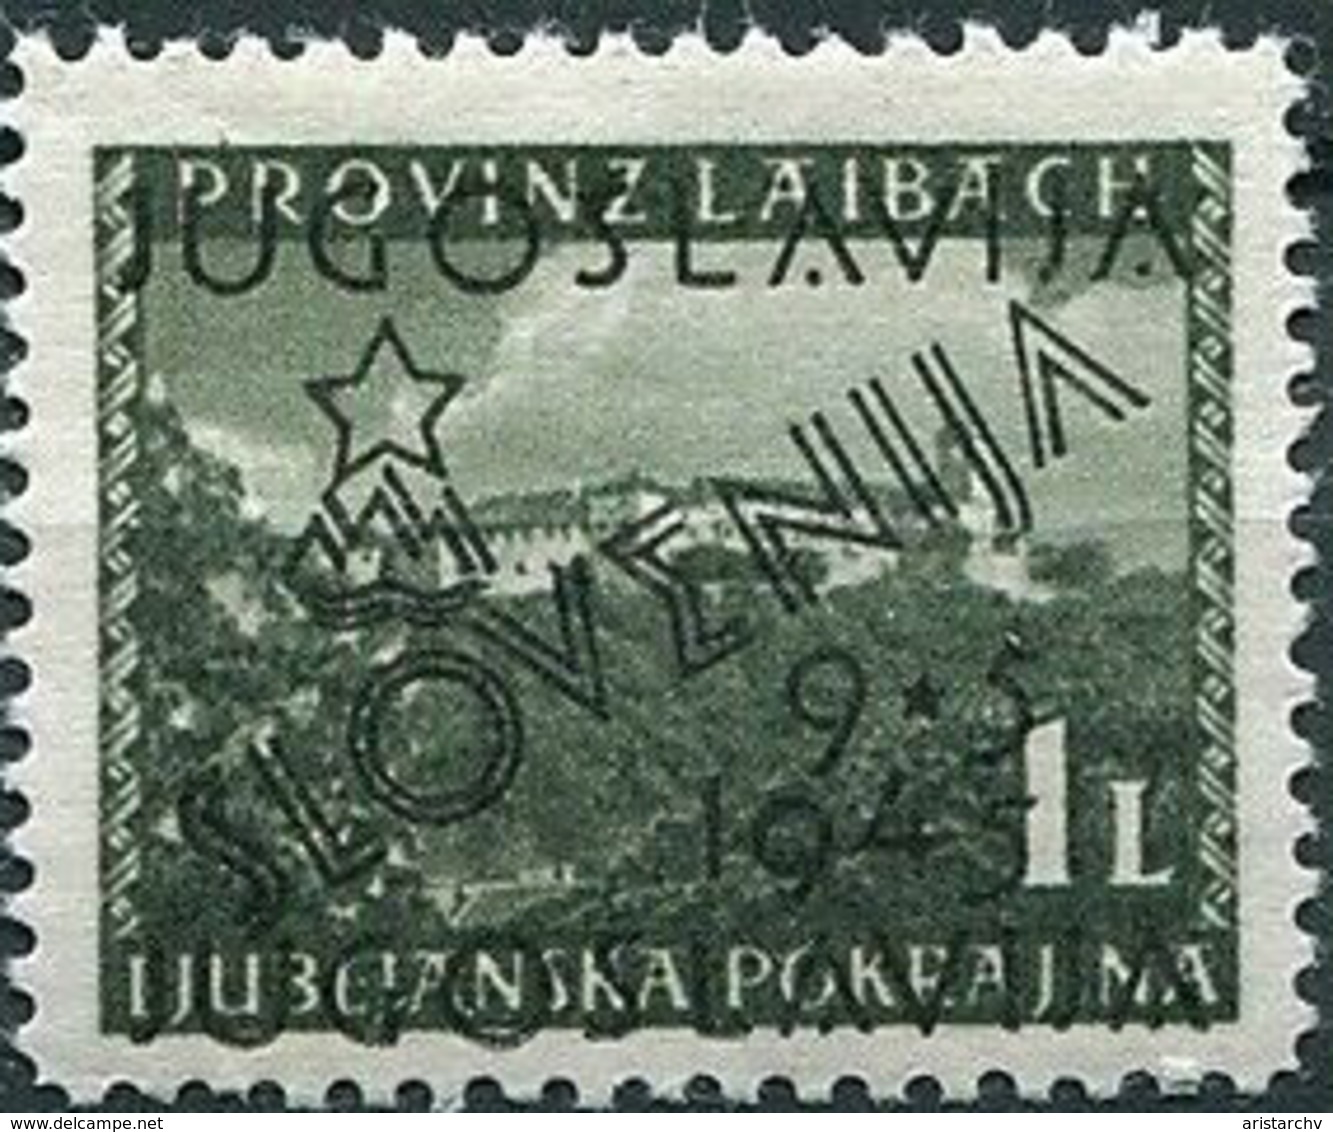 PROVINZ LAIBACH OVERPRINT YUGOSLAVIA SLOVENIA 9*5 1945 12 STAMPS